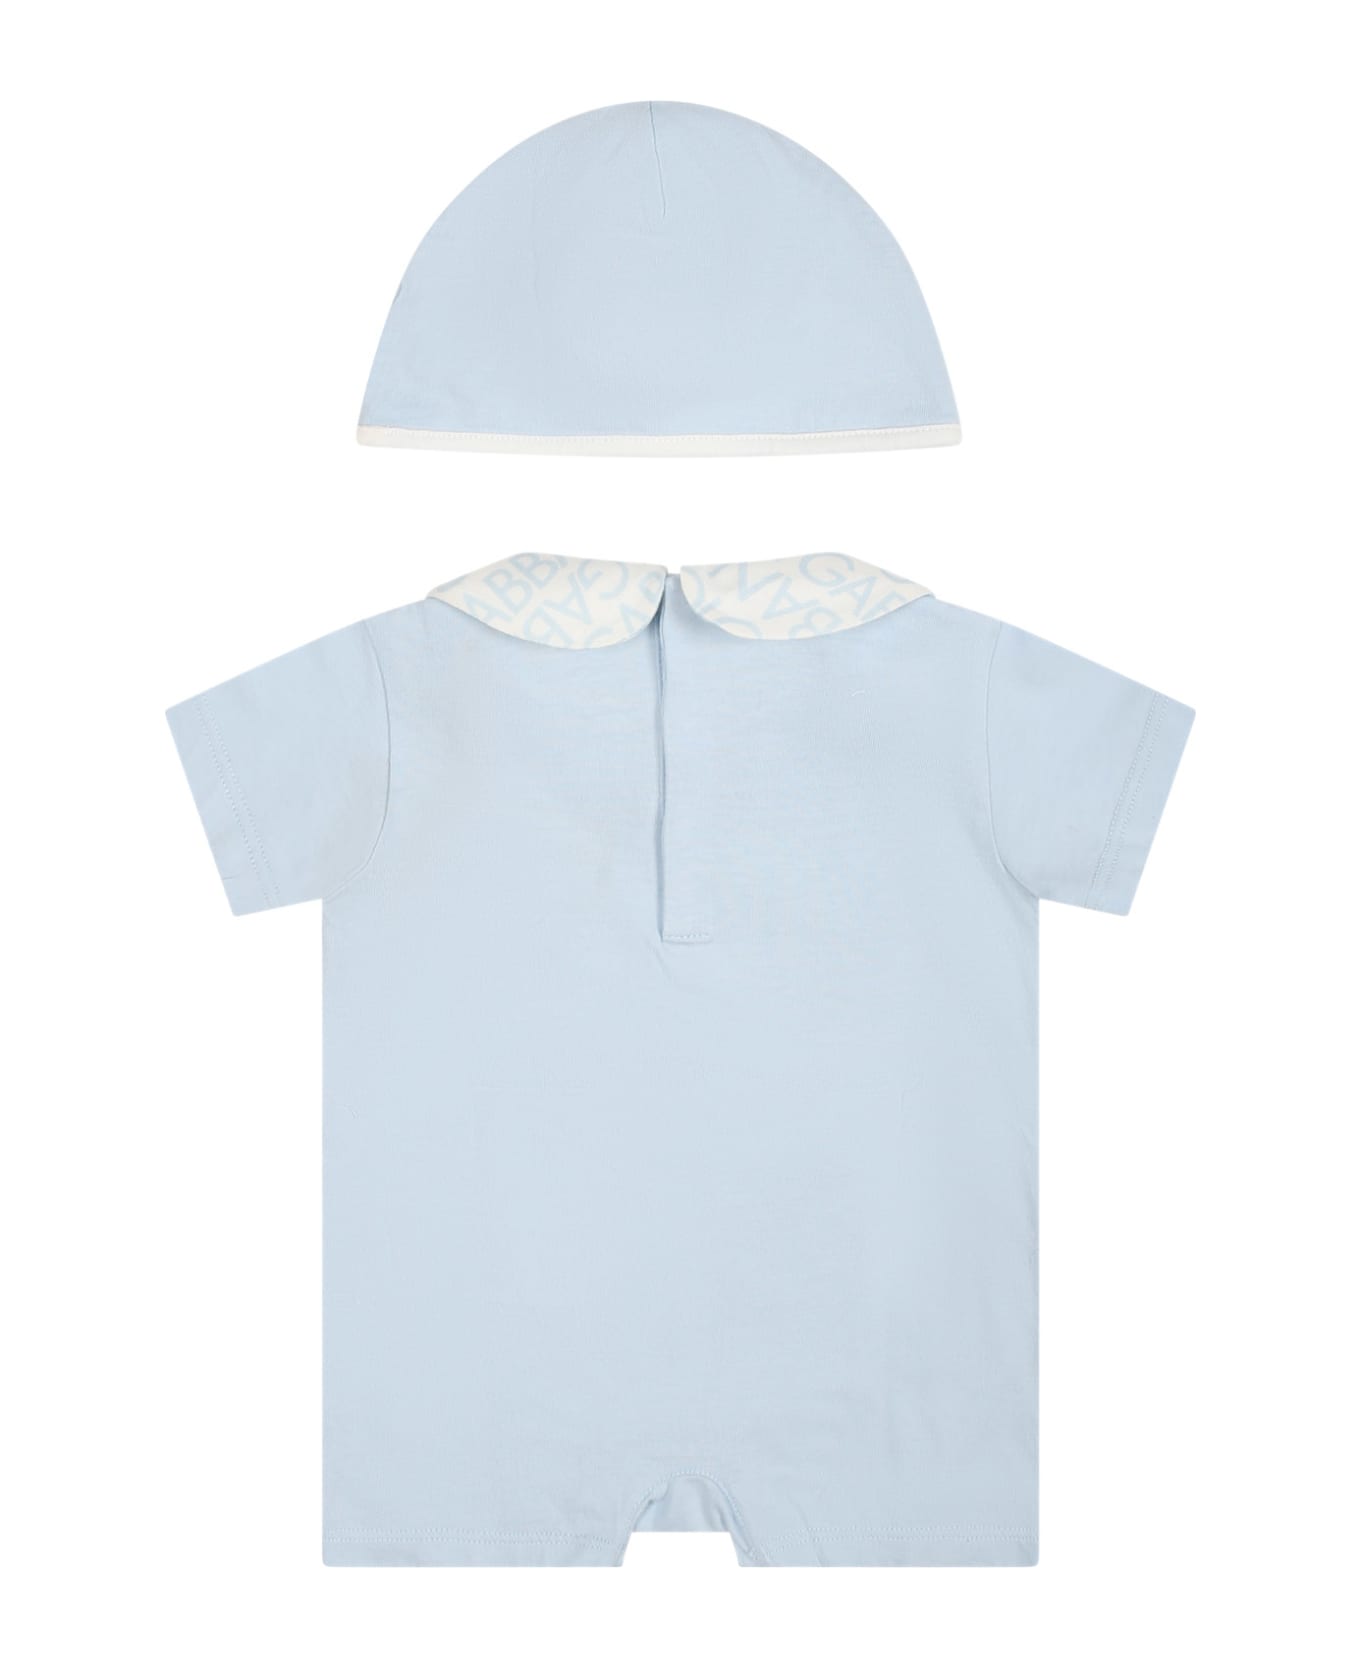 Dolce & Gabbana Light Blue Romper Suit For Baby Boy With Logo - Celeste